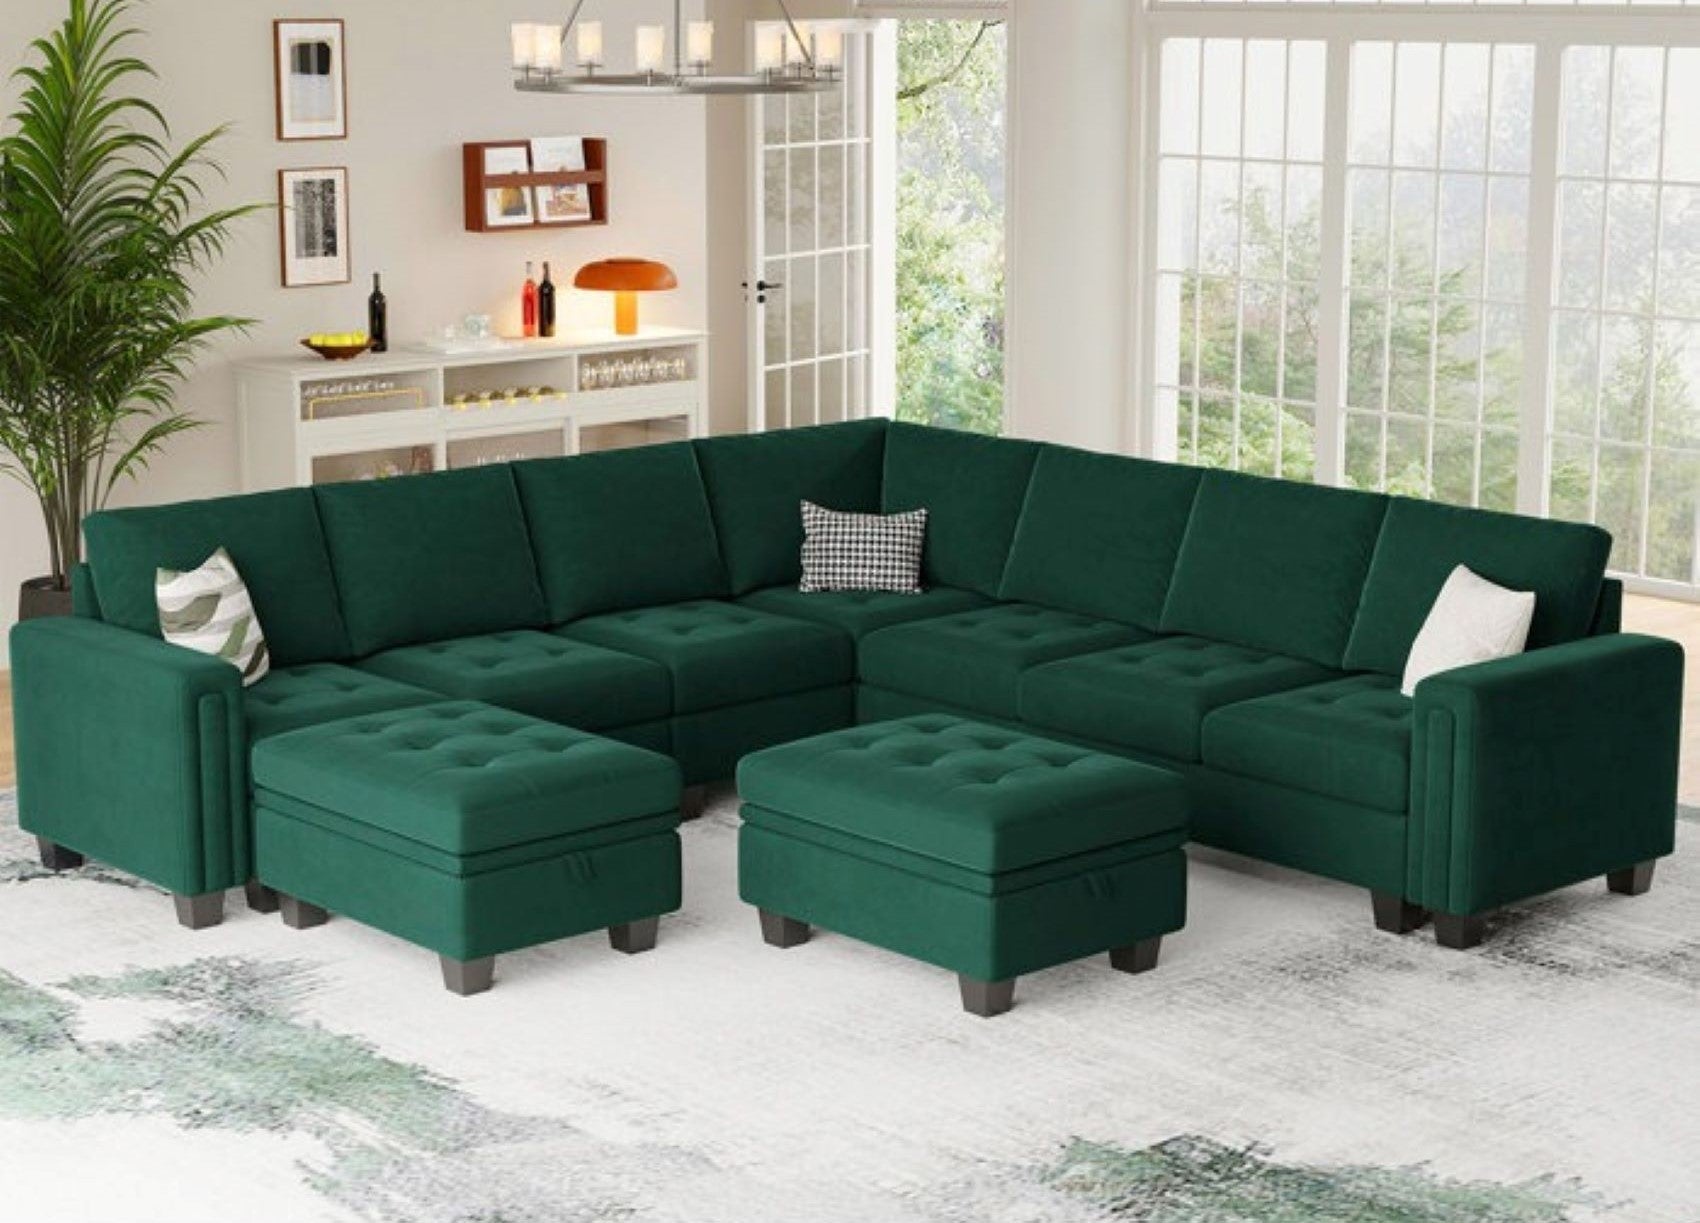 Moris 8 Seater Interchangeable Modular Corner Fabric Sofa with Storage Ottoman For Living Room | Bedroom | Office - Torque India